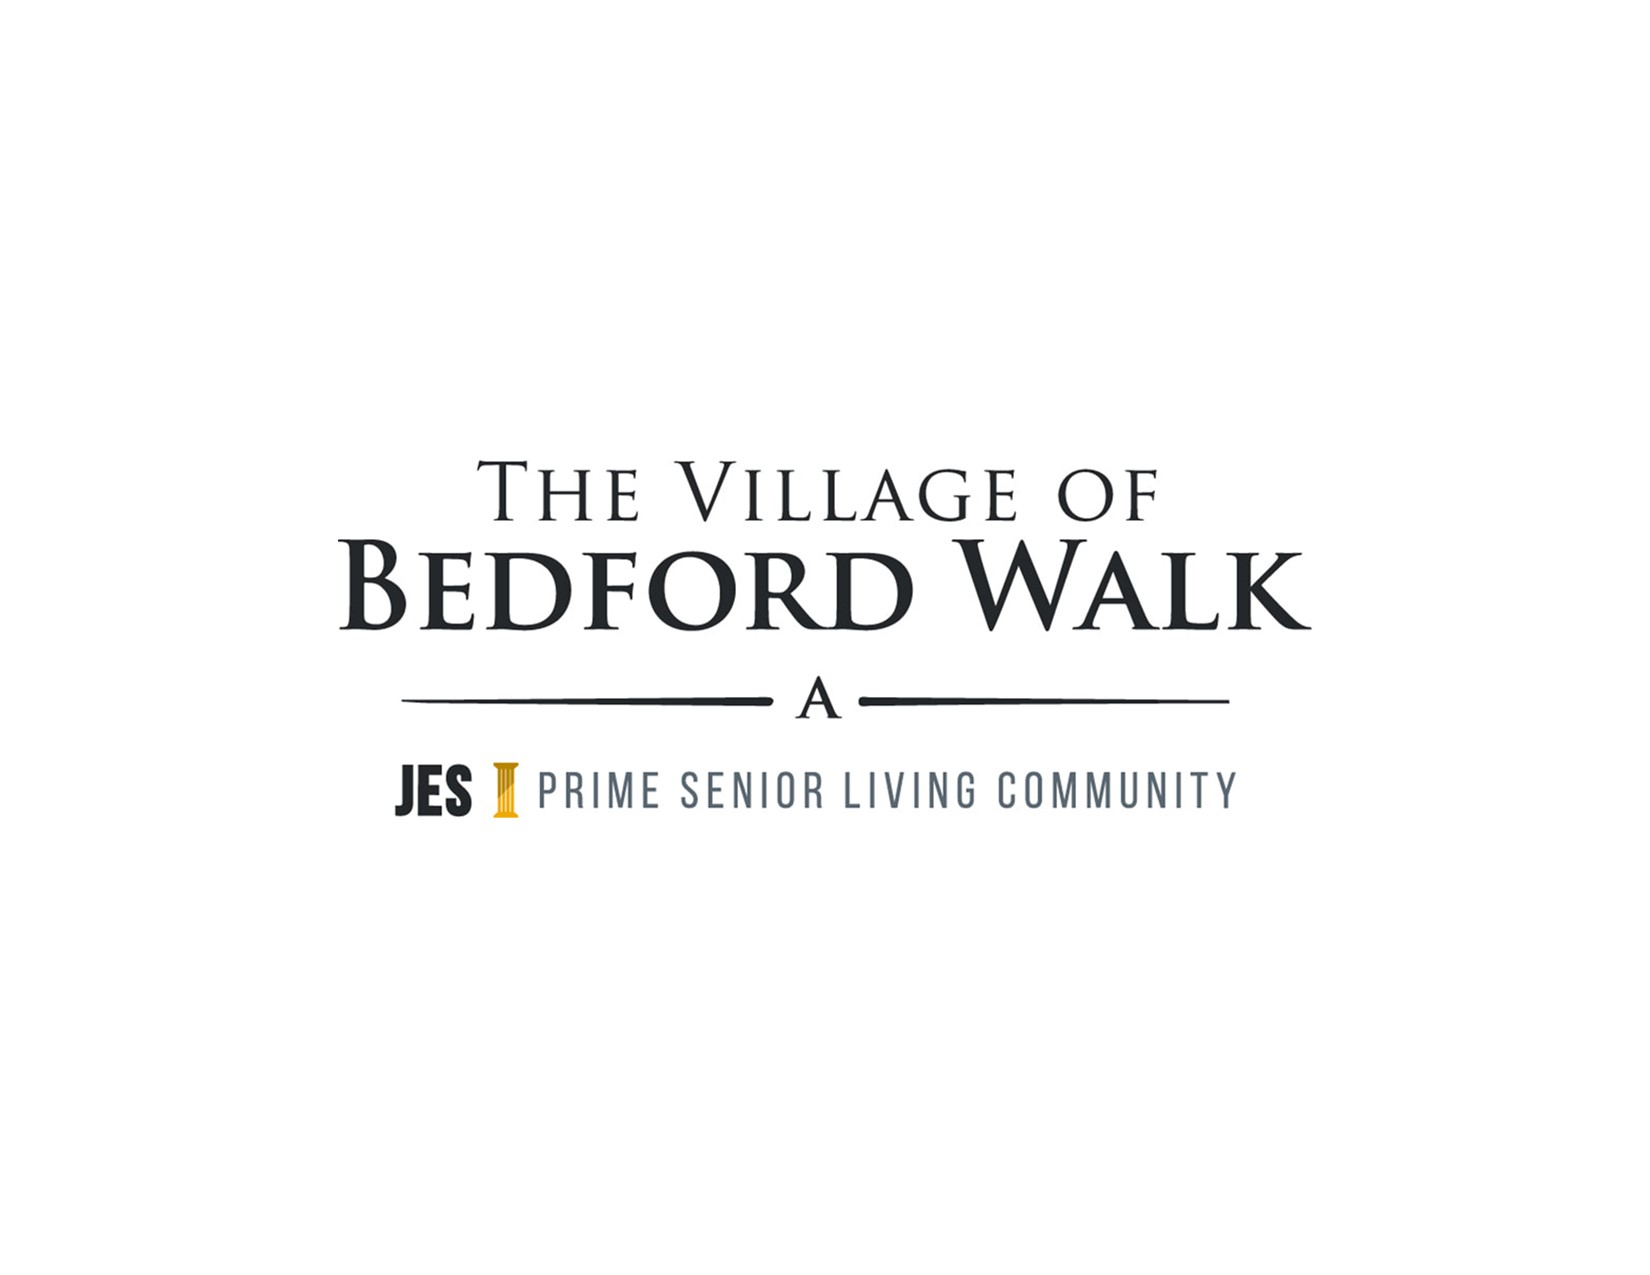 The Village of Bedford Walk